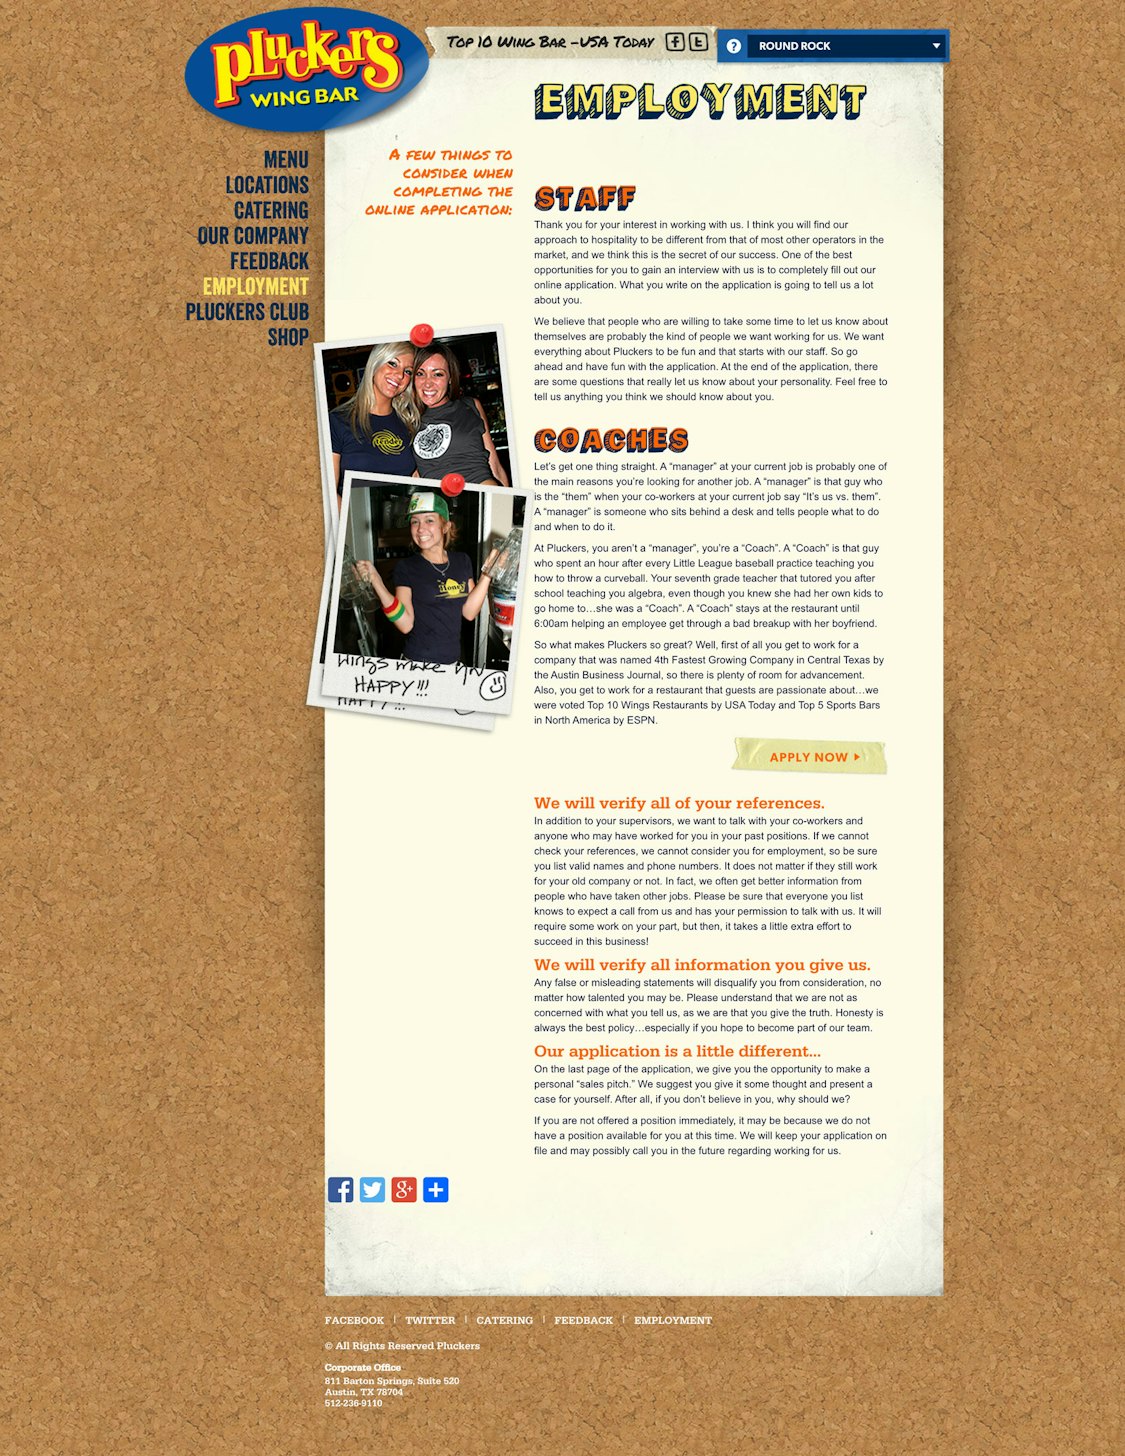 Screenshot 3: Restaurant website design shows Pluckers website logo and website content related to the restaurant's history